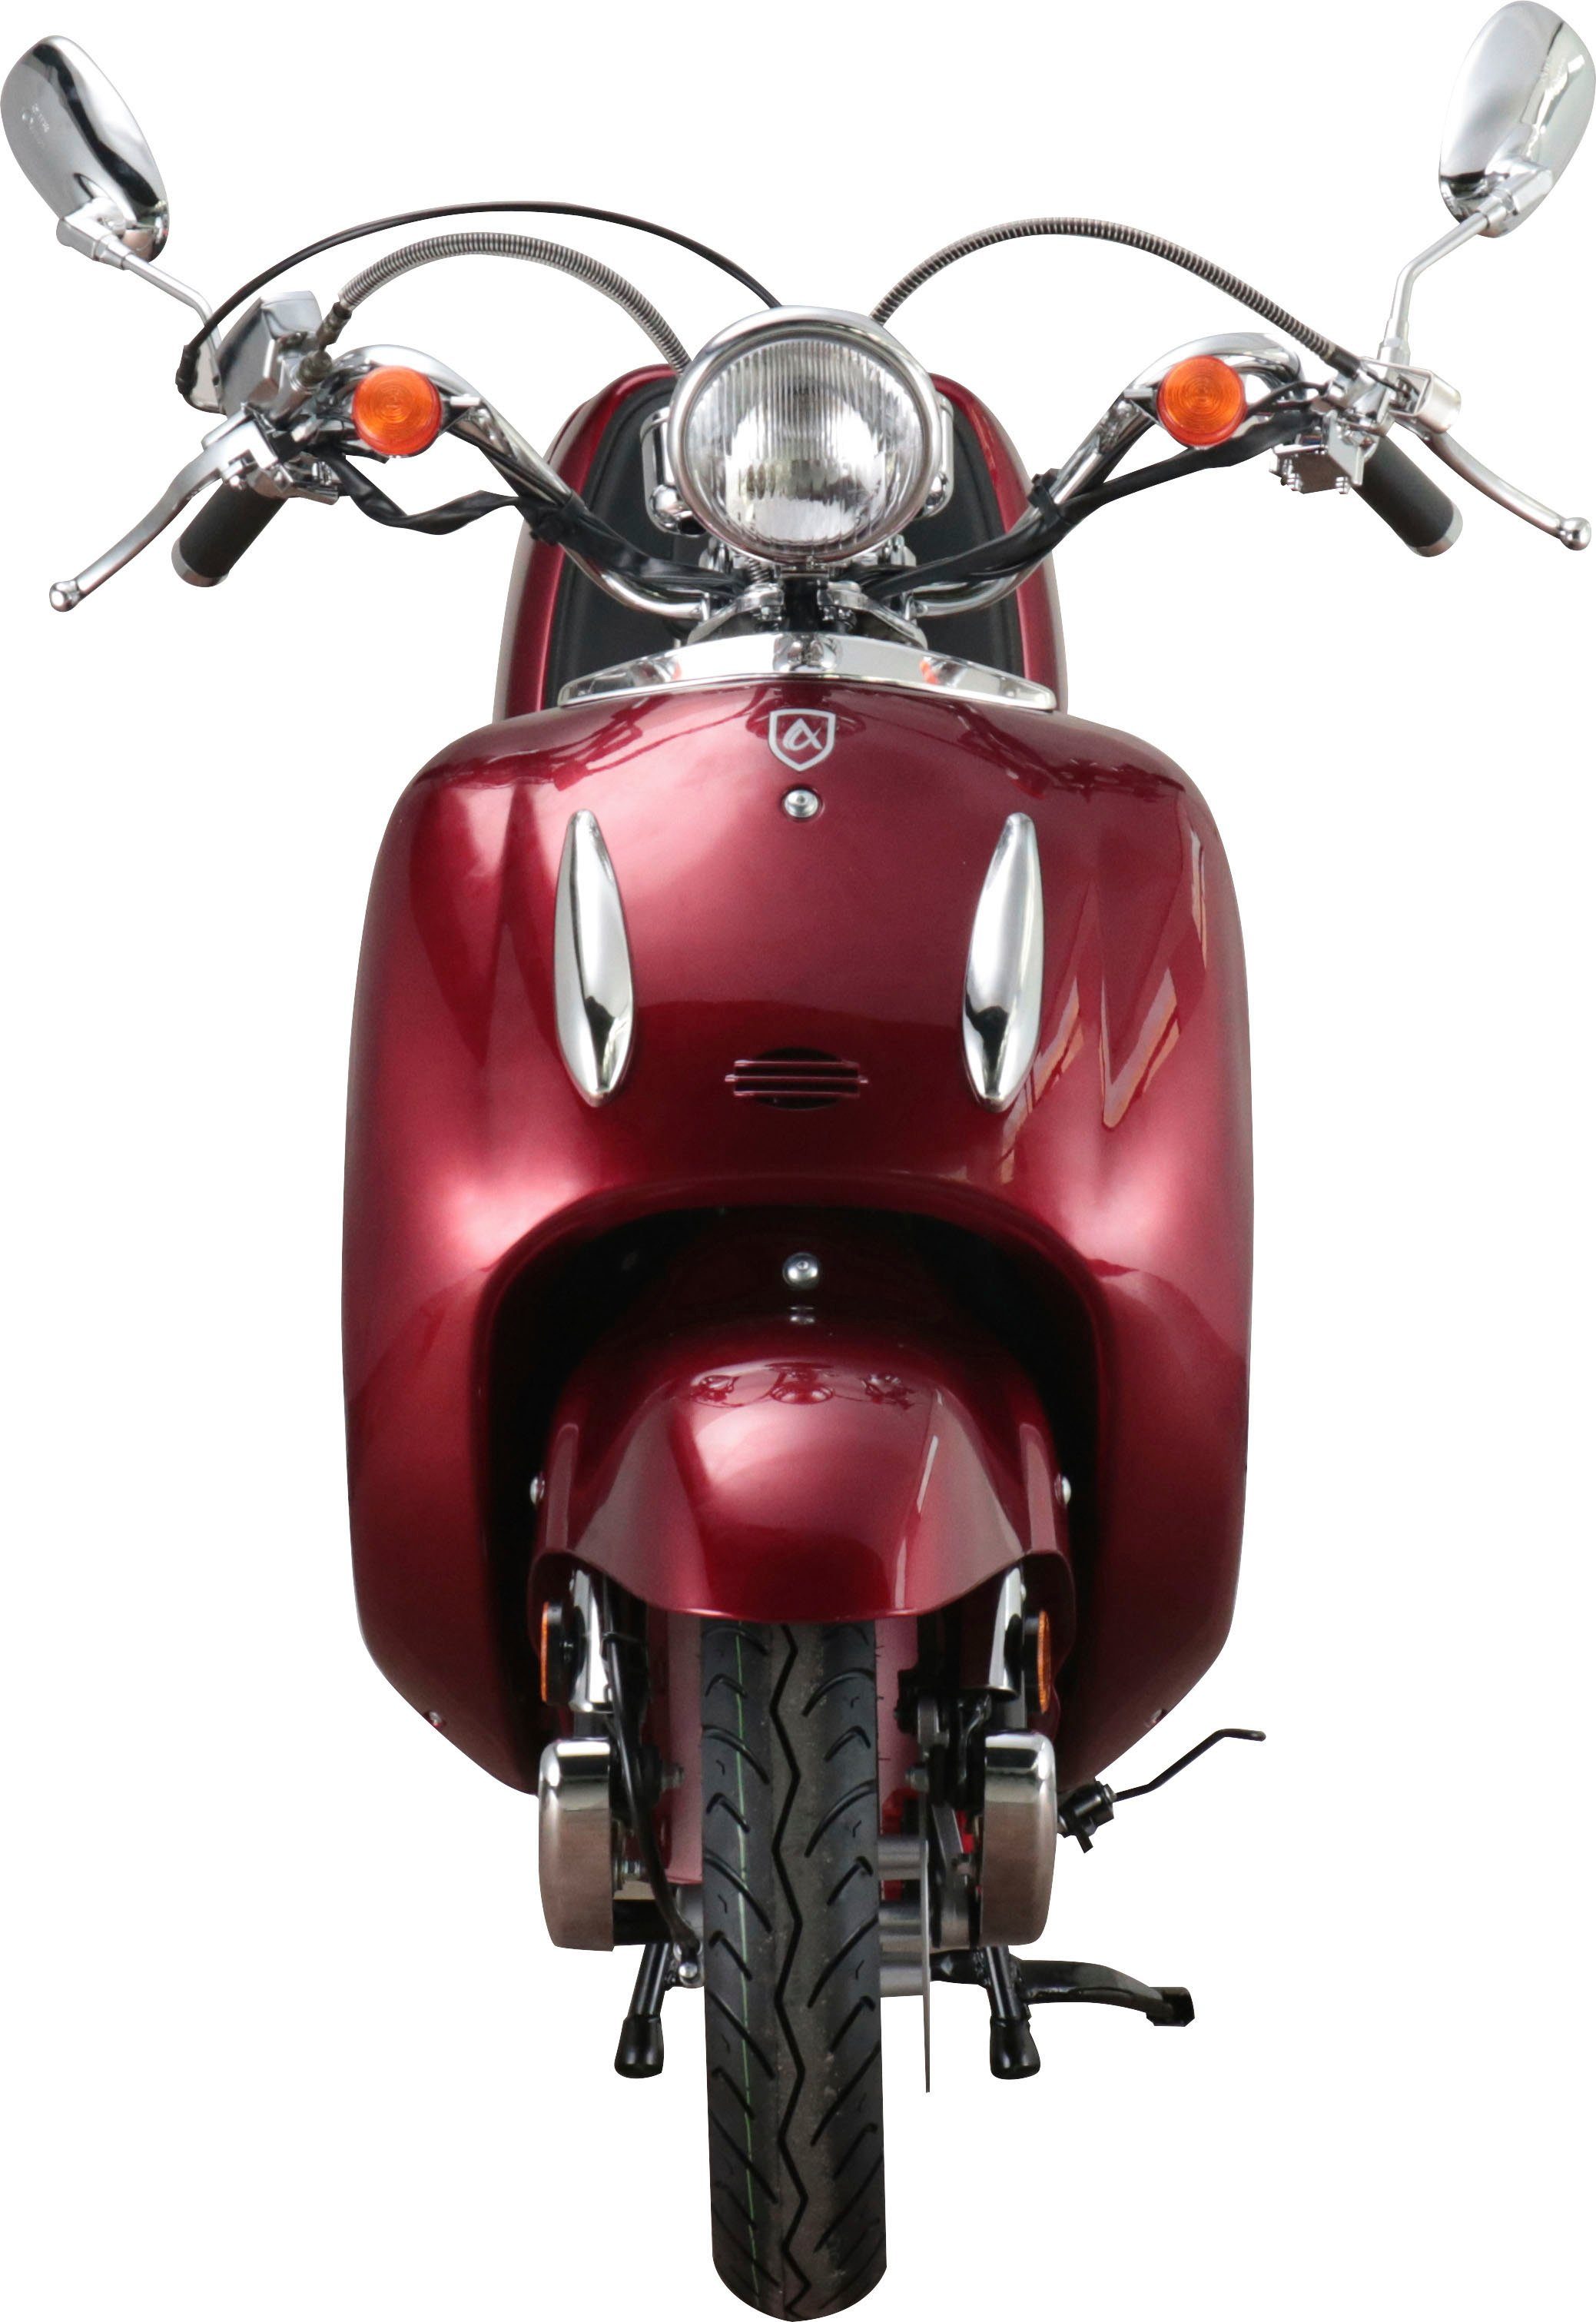 Alpha Motors Motorroller 125 Retro 85 km/h, Euro inkl. Topcase ccm, weinrot Firenze, 5